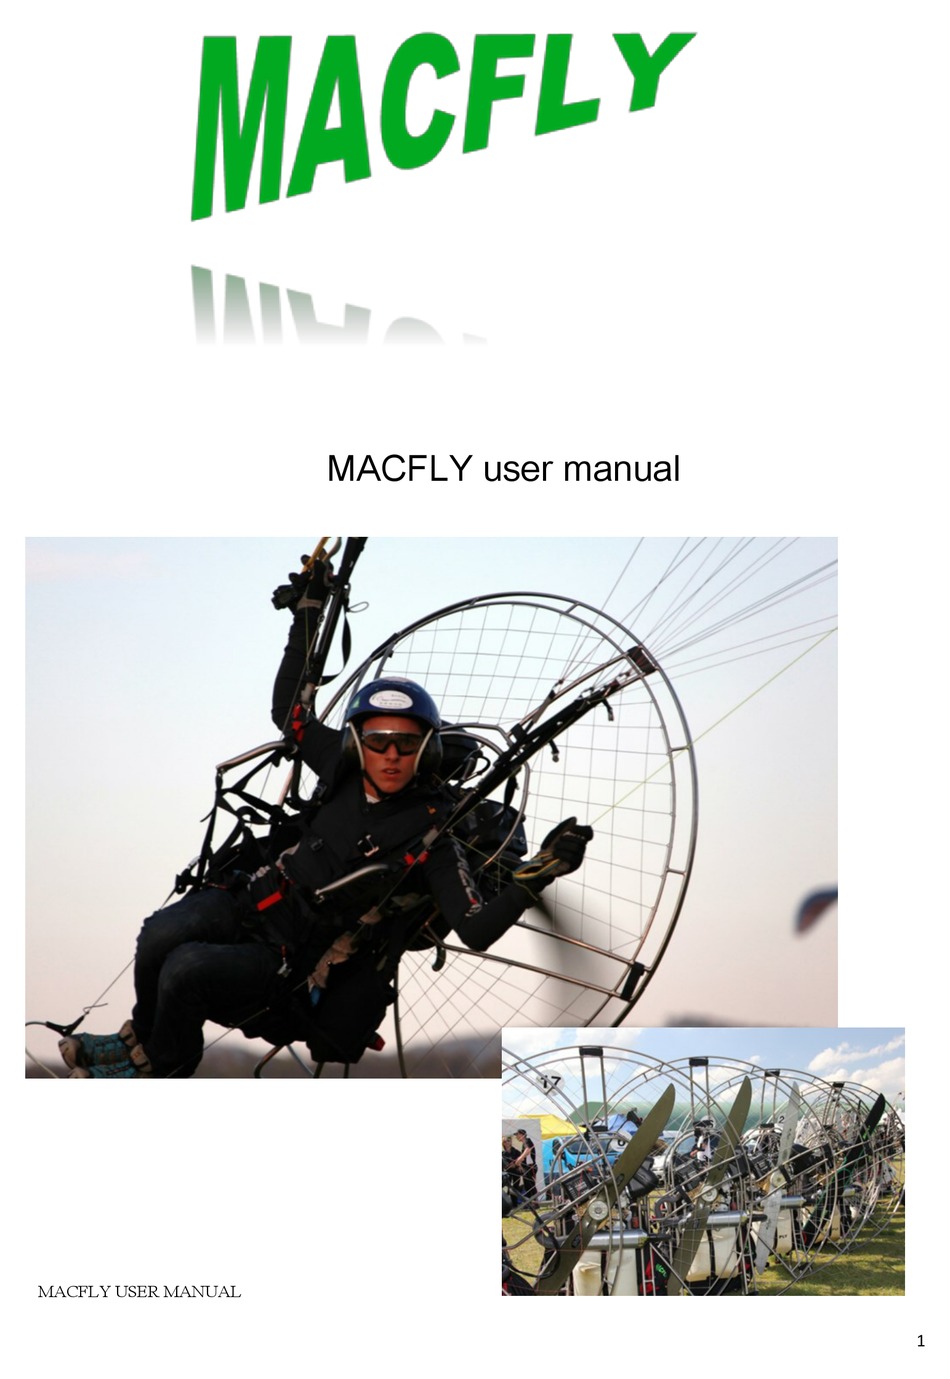 MACFLY POLINI THOR 130 USER MANUAL Pdf Download